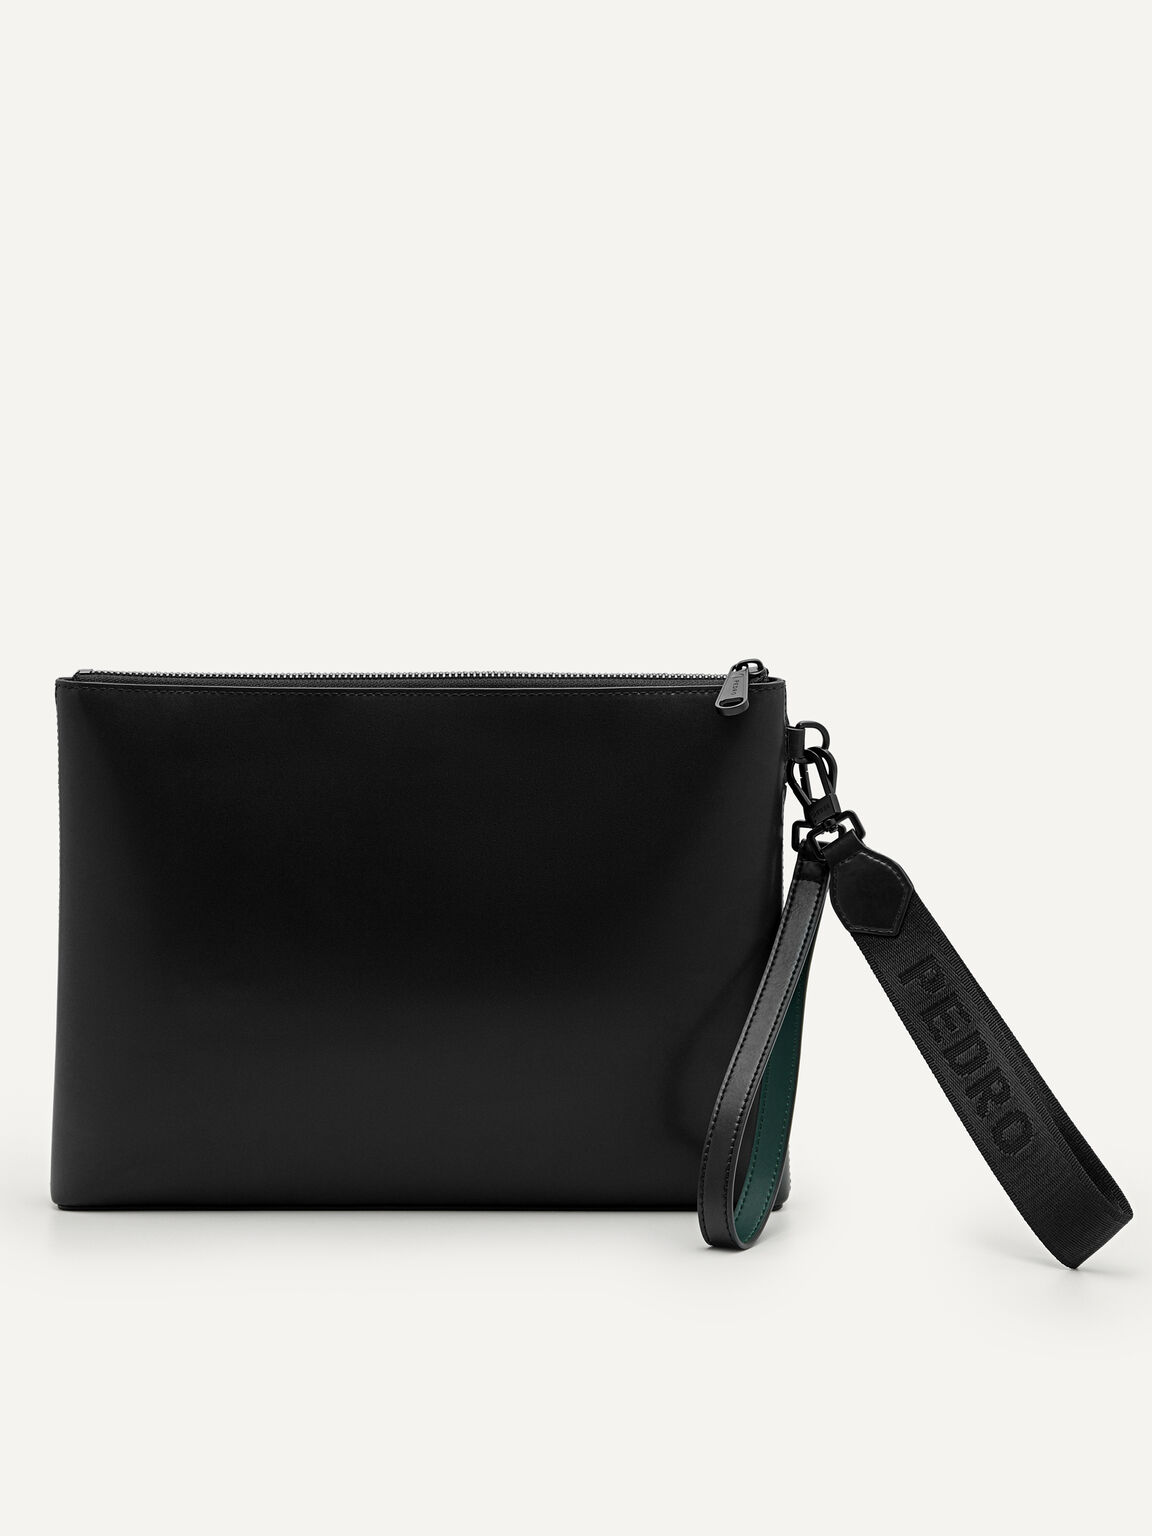 Allen Leather Portfolio Bag, Black